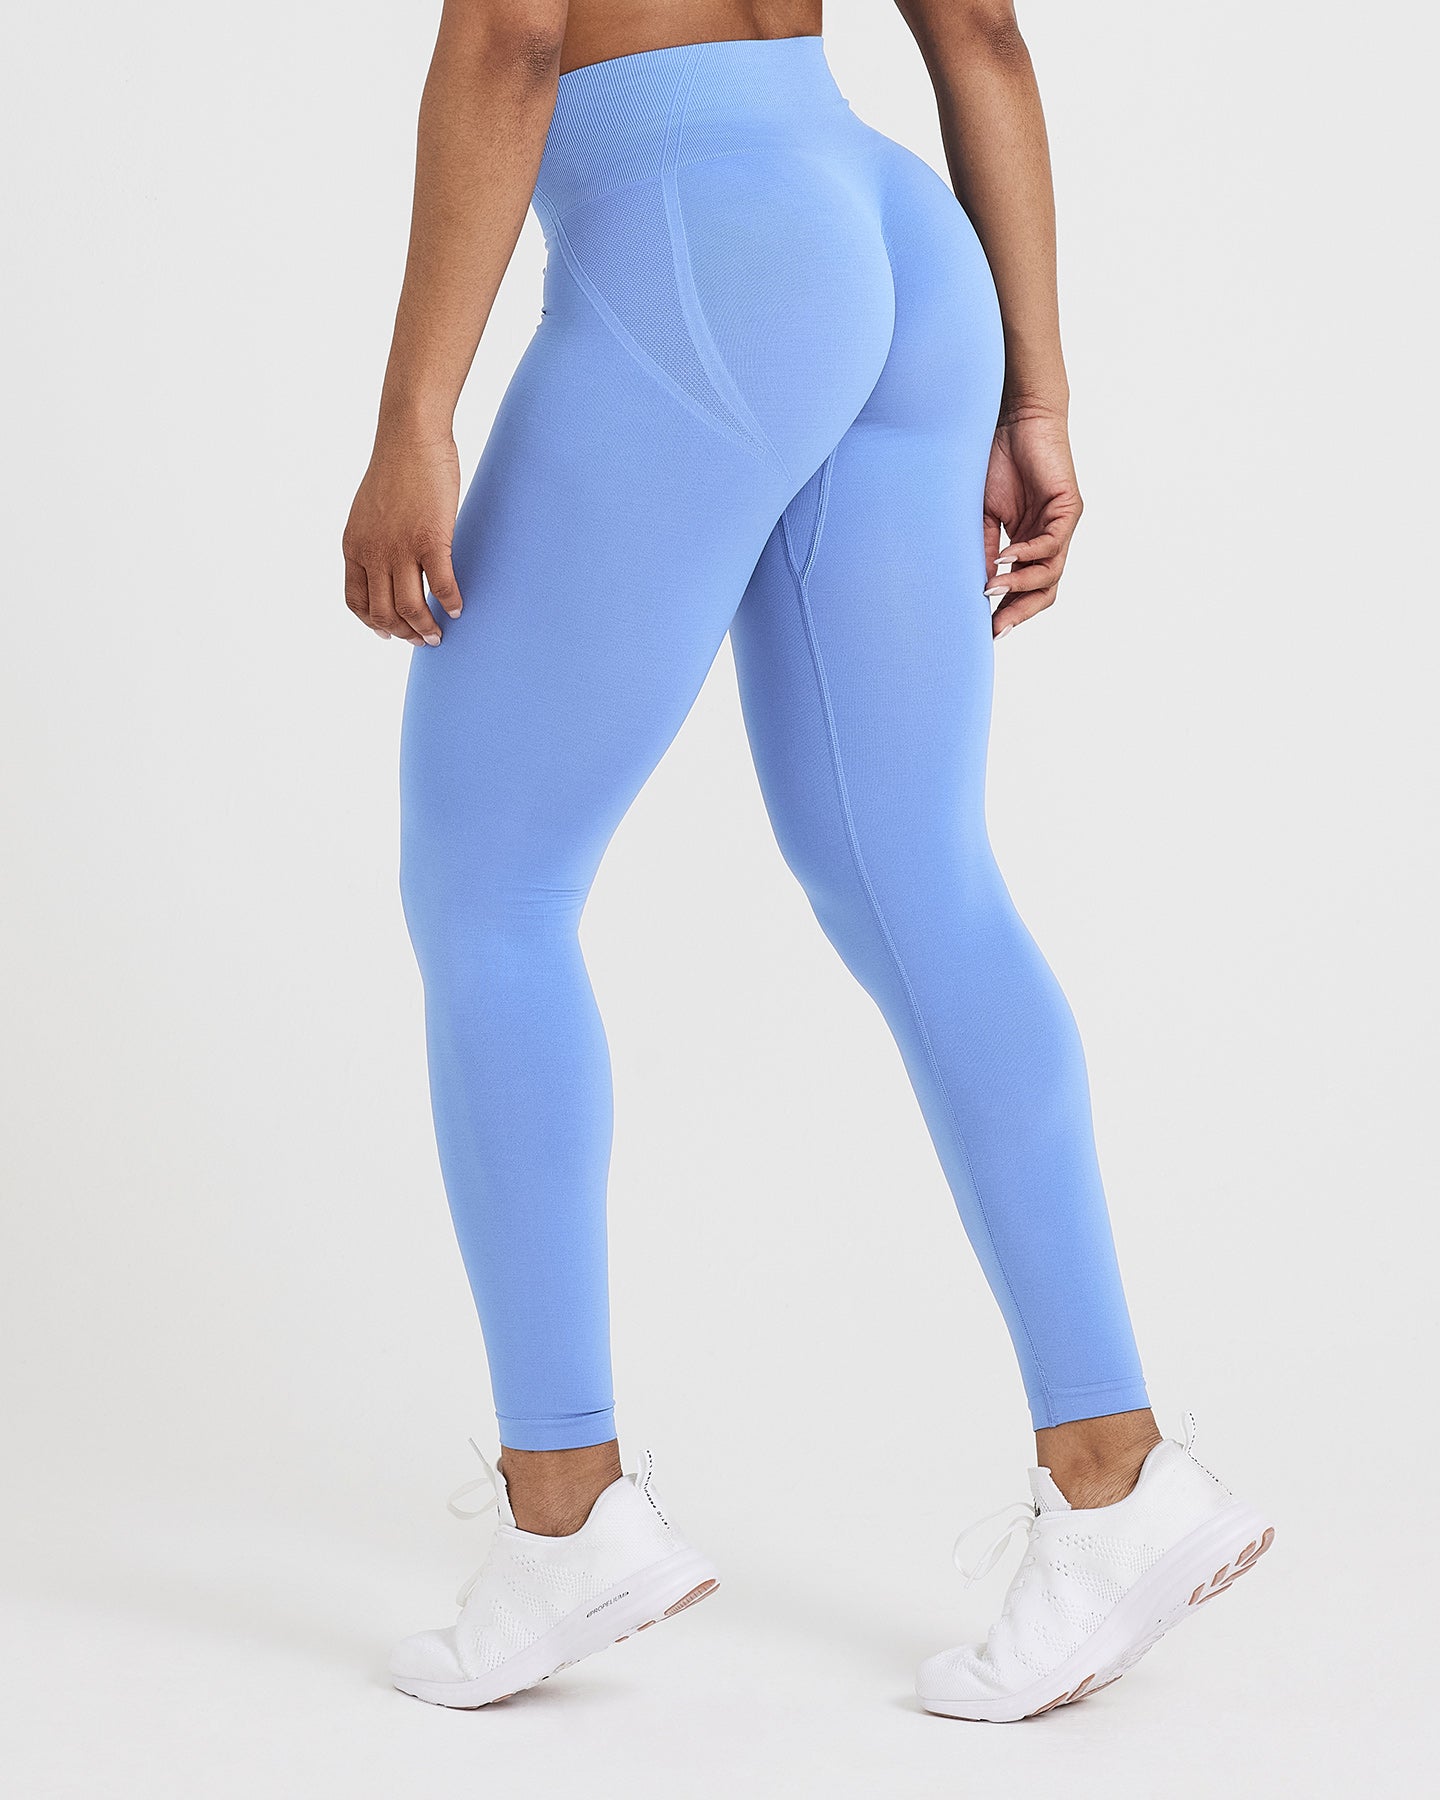 Jean Legging - Deep Blue. BrazilActiv. Fashion fitness Wear